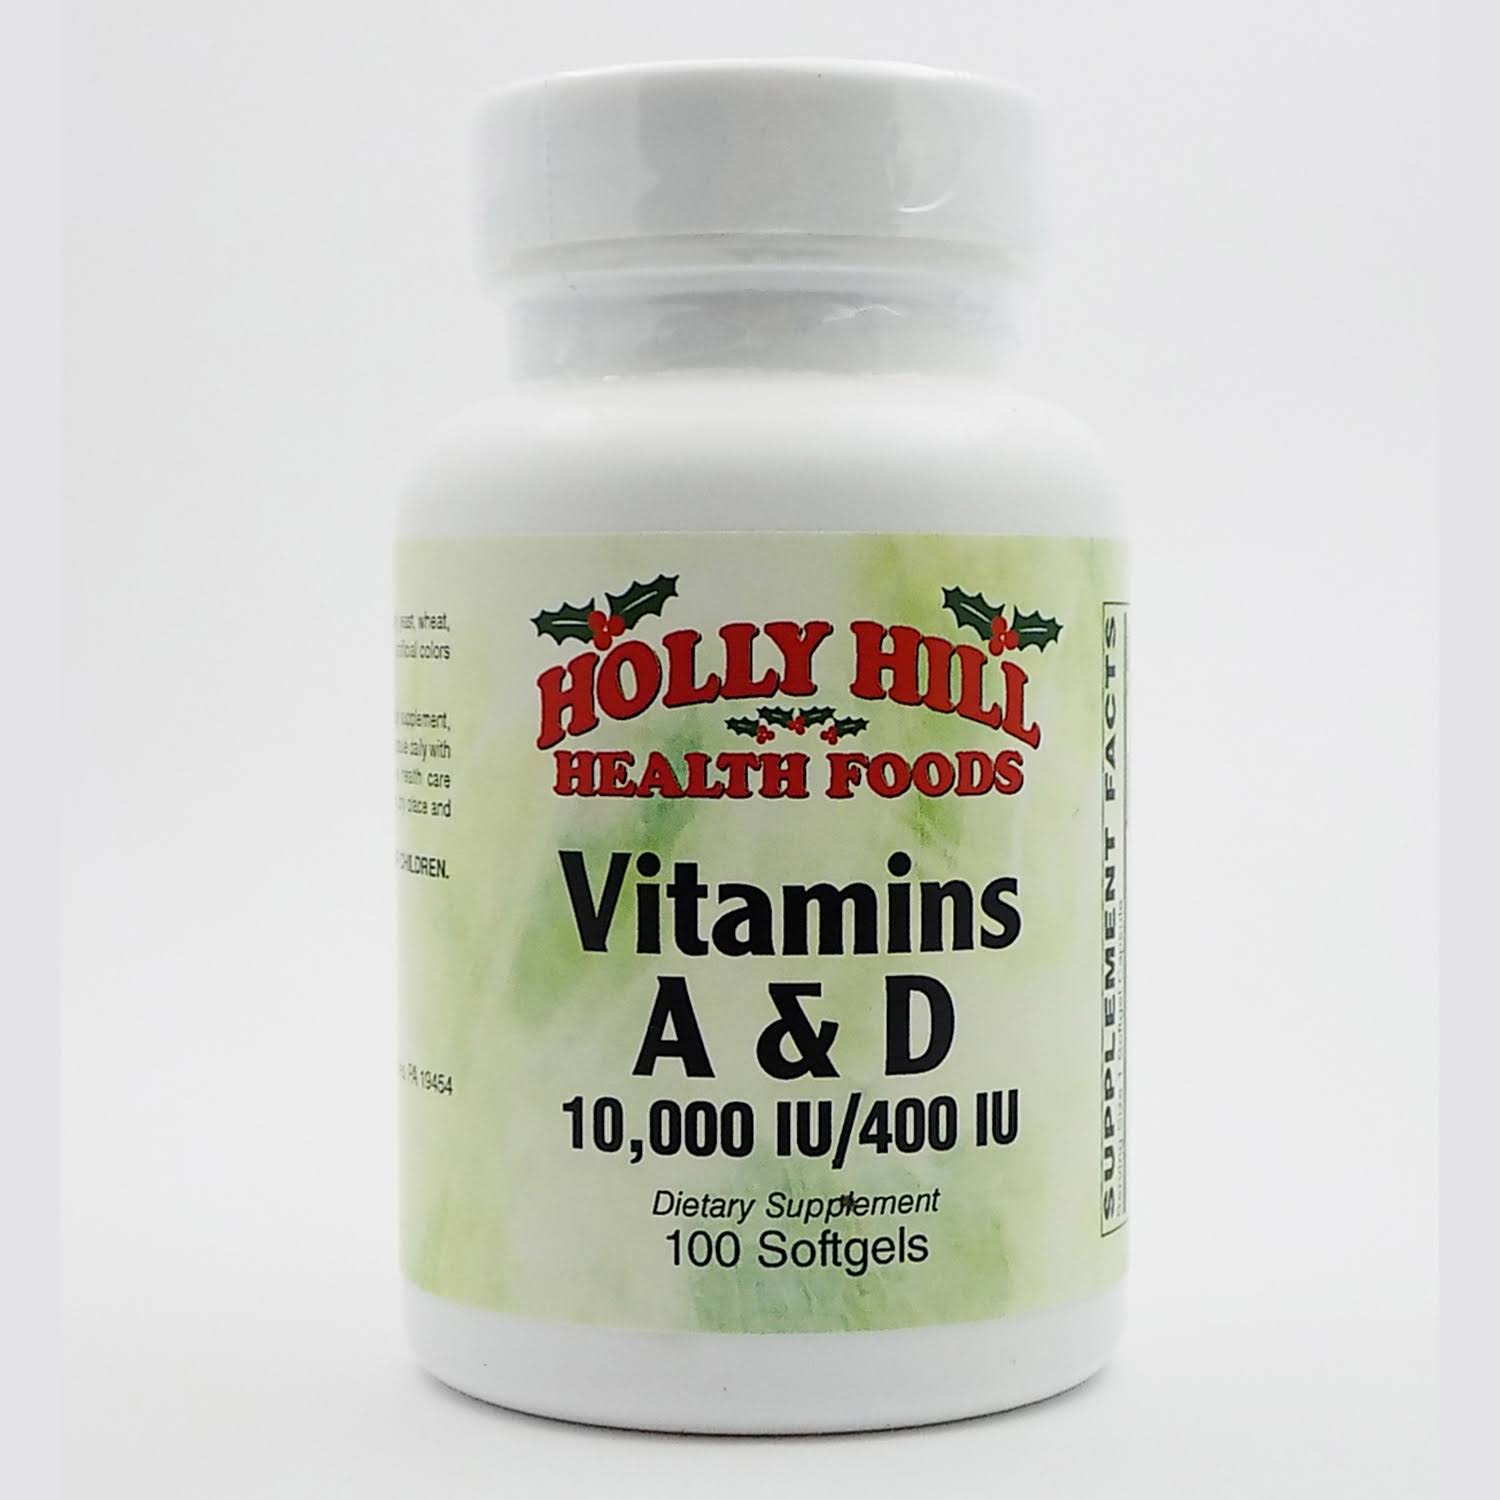 Holly Hill Health Foods, Vitamins A & D, 100 Softgels